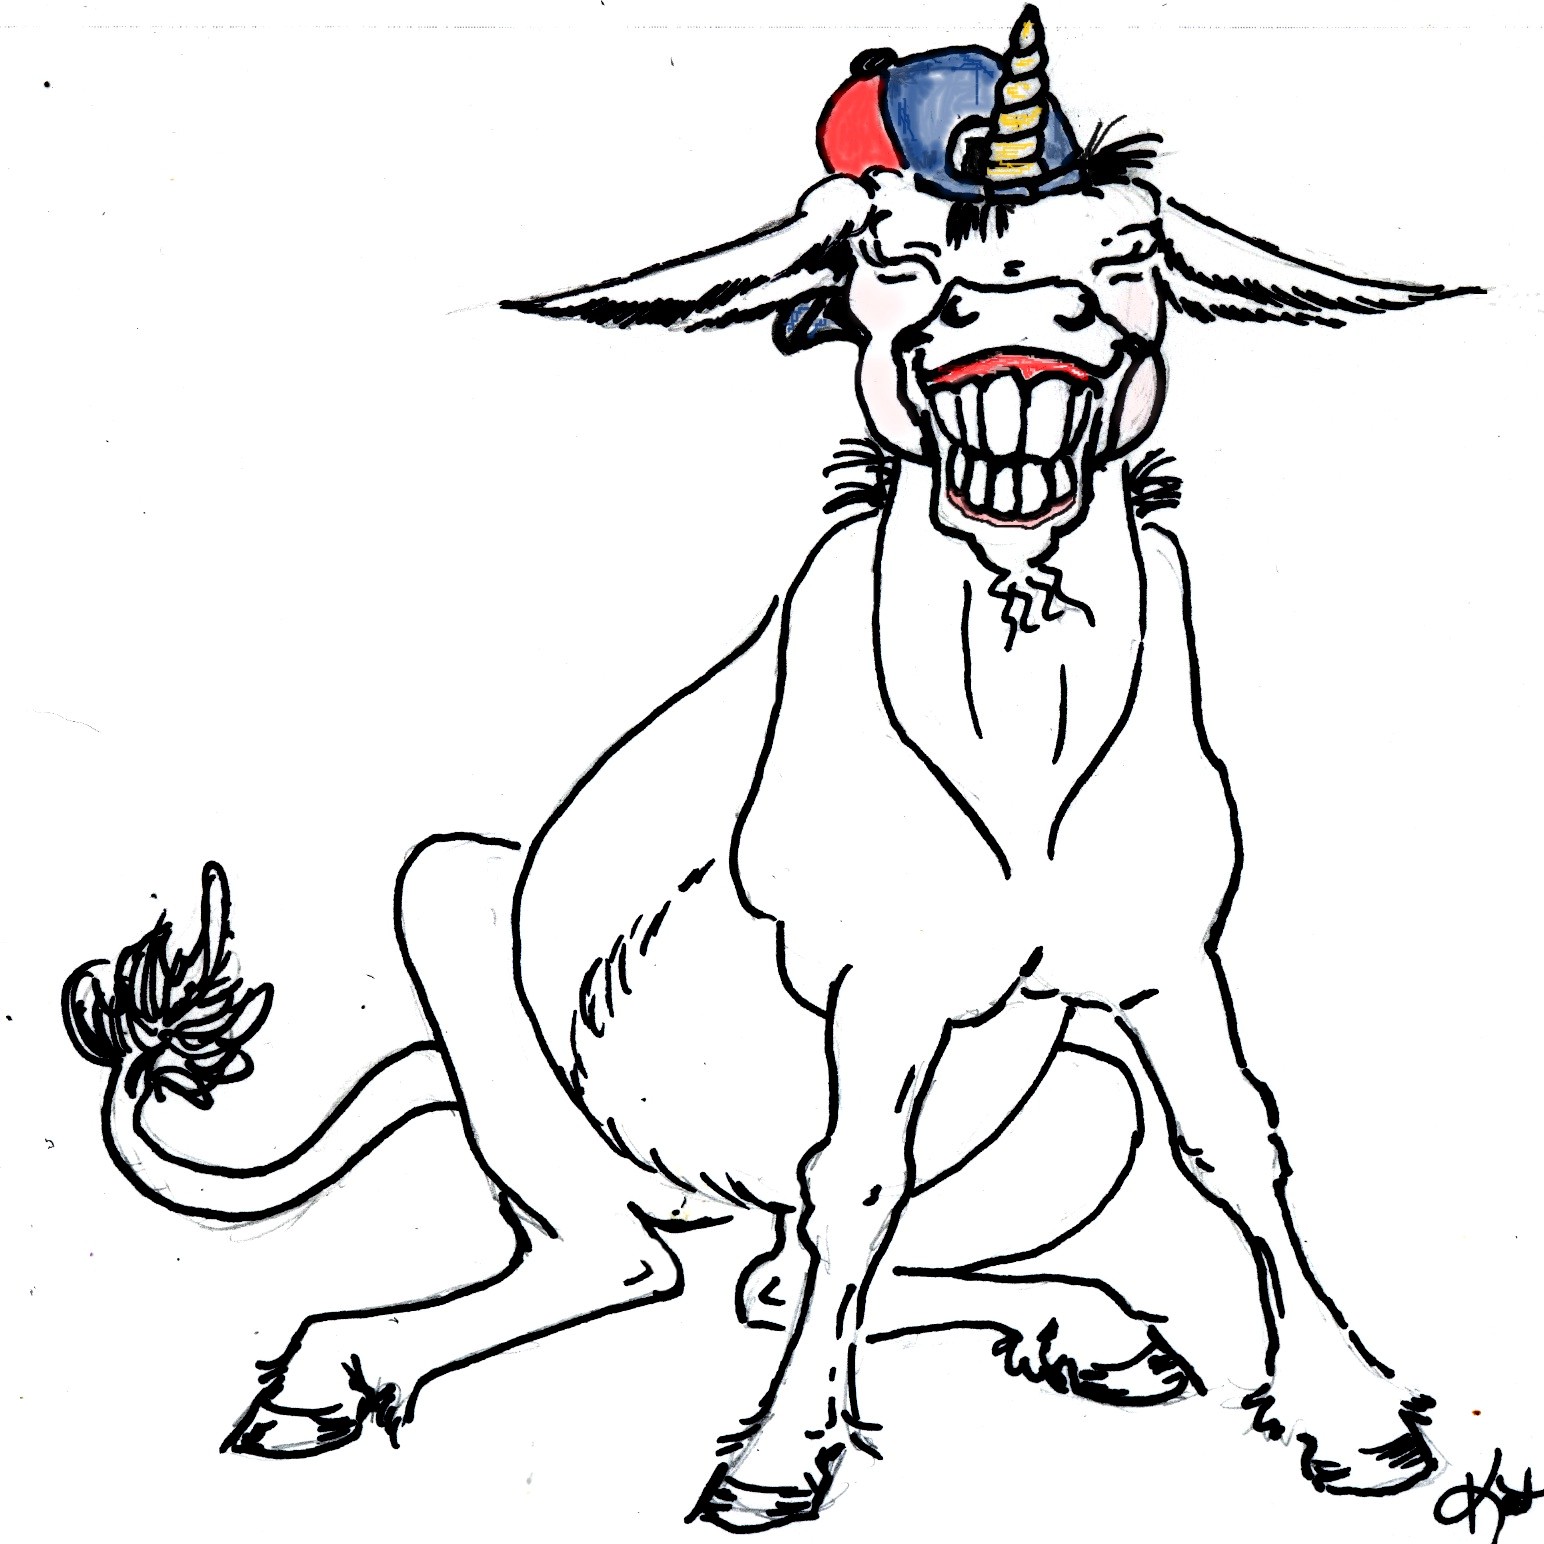 Wilbur the Redneck Unicorn by katsgone on deviantART